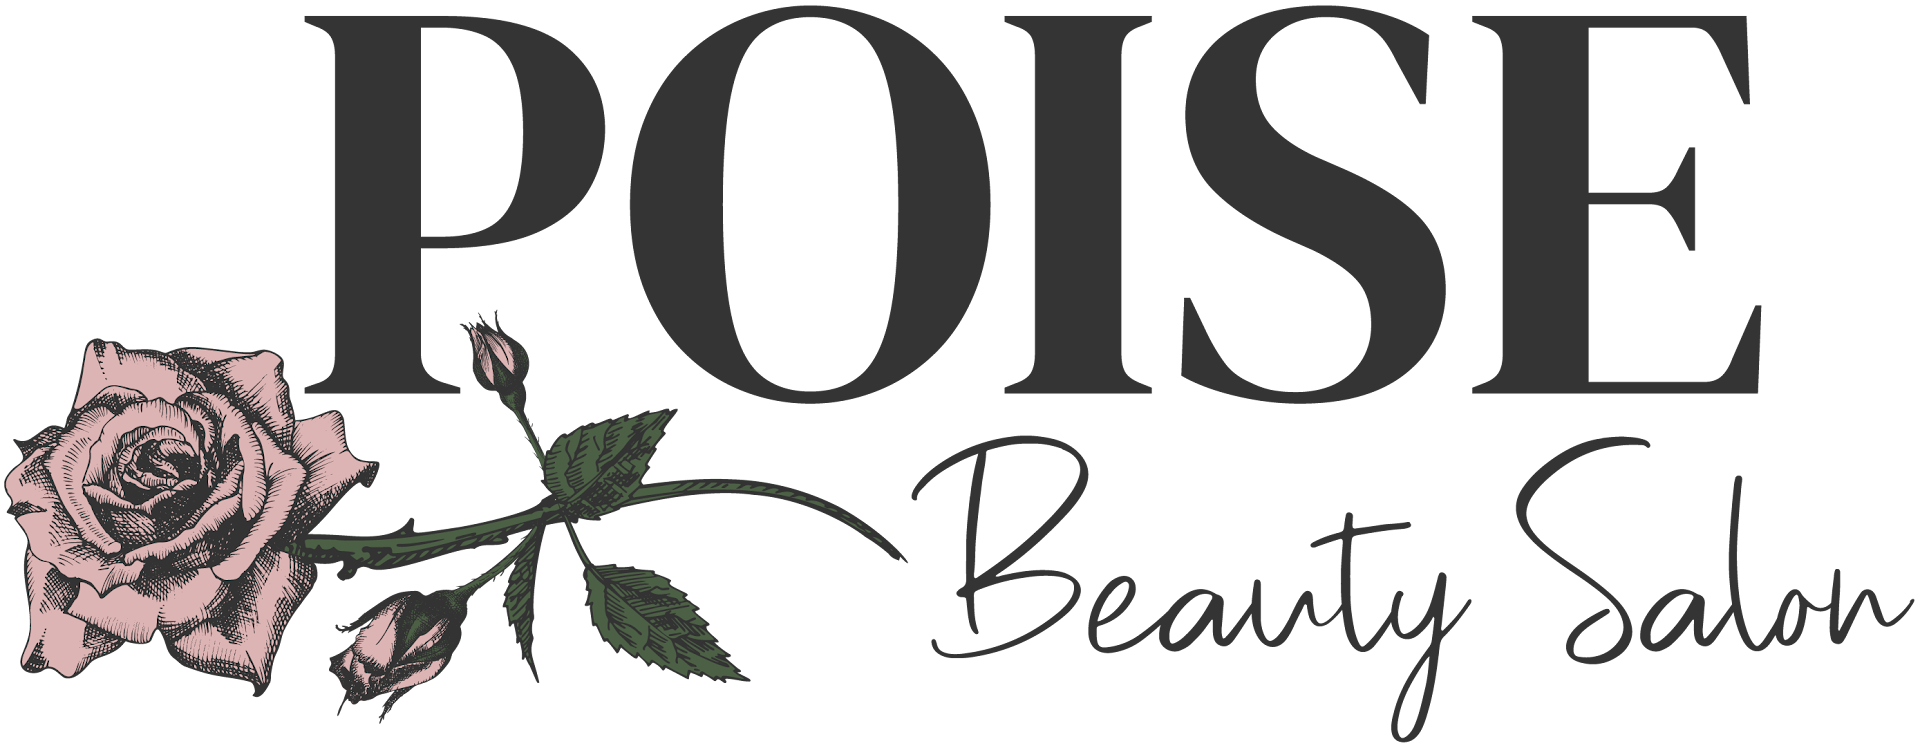 Poise Beauty Salon